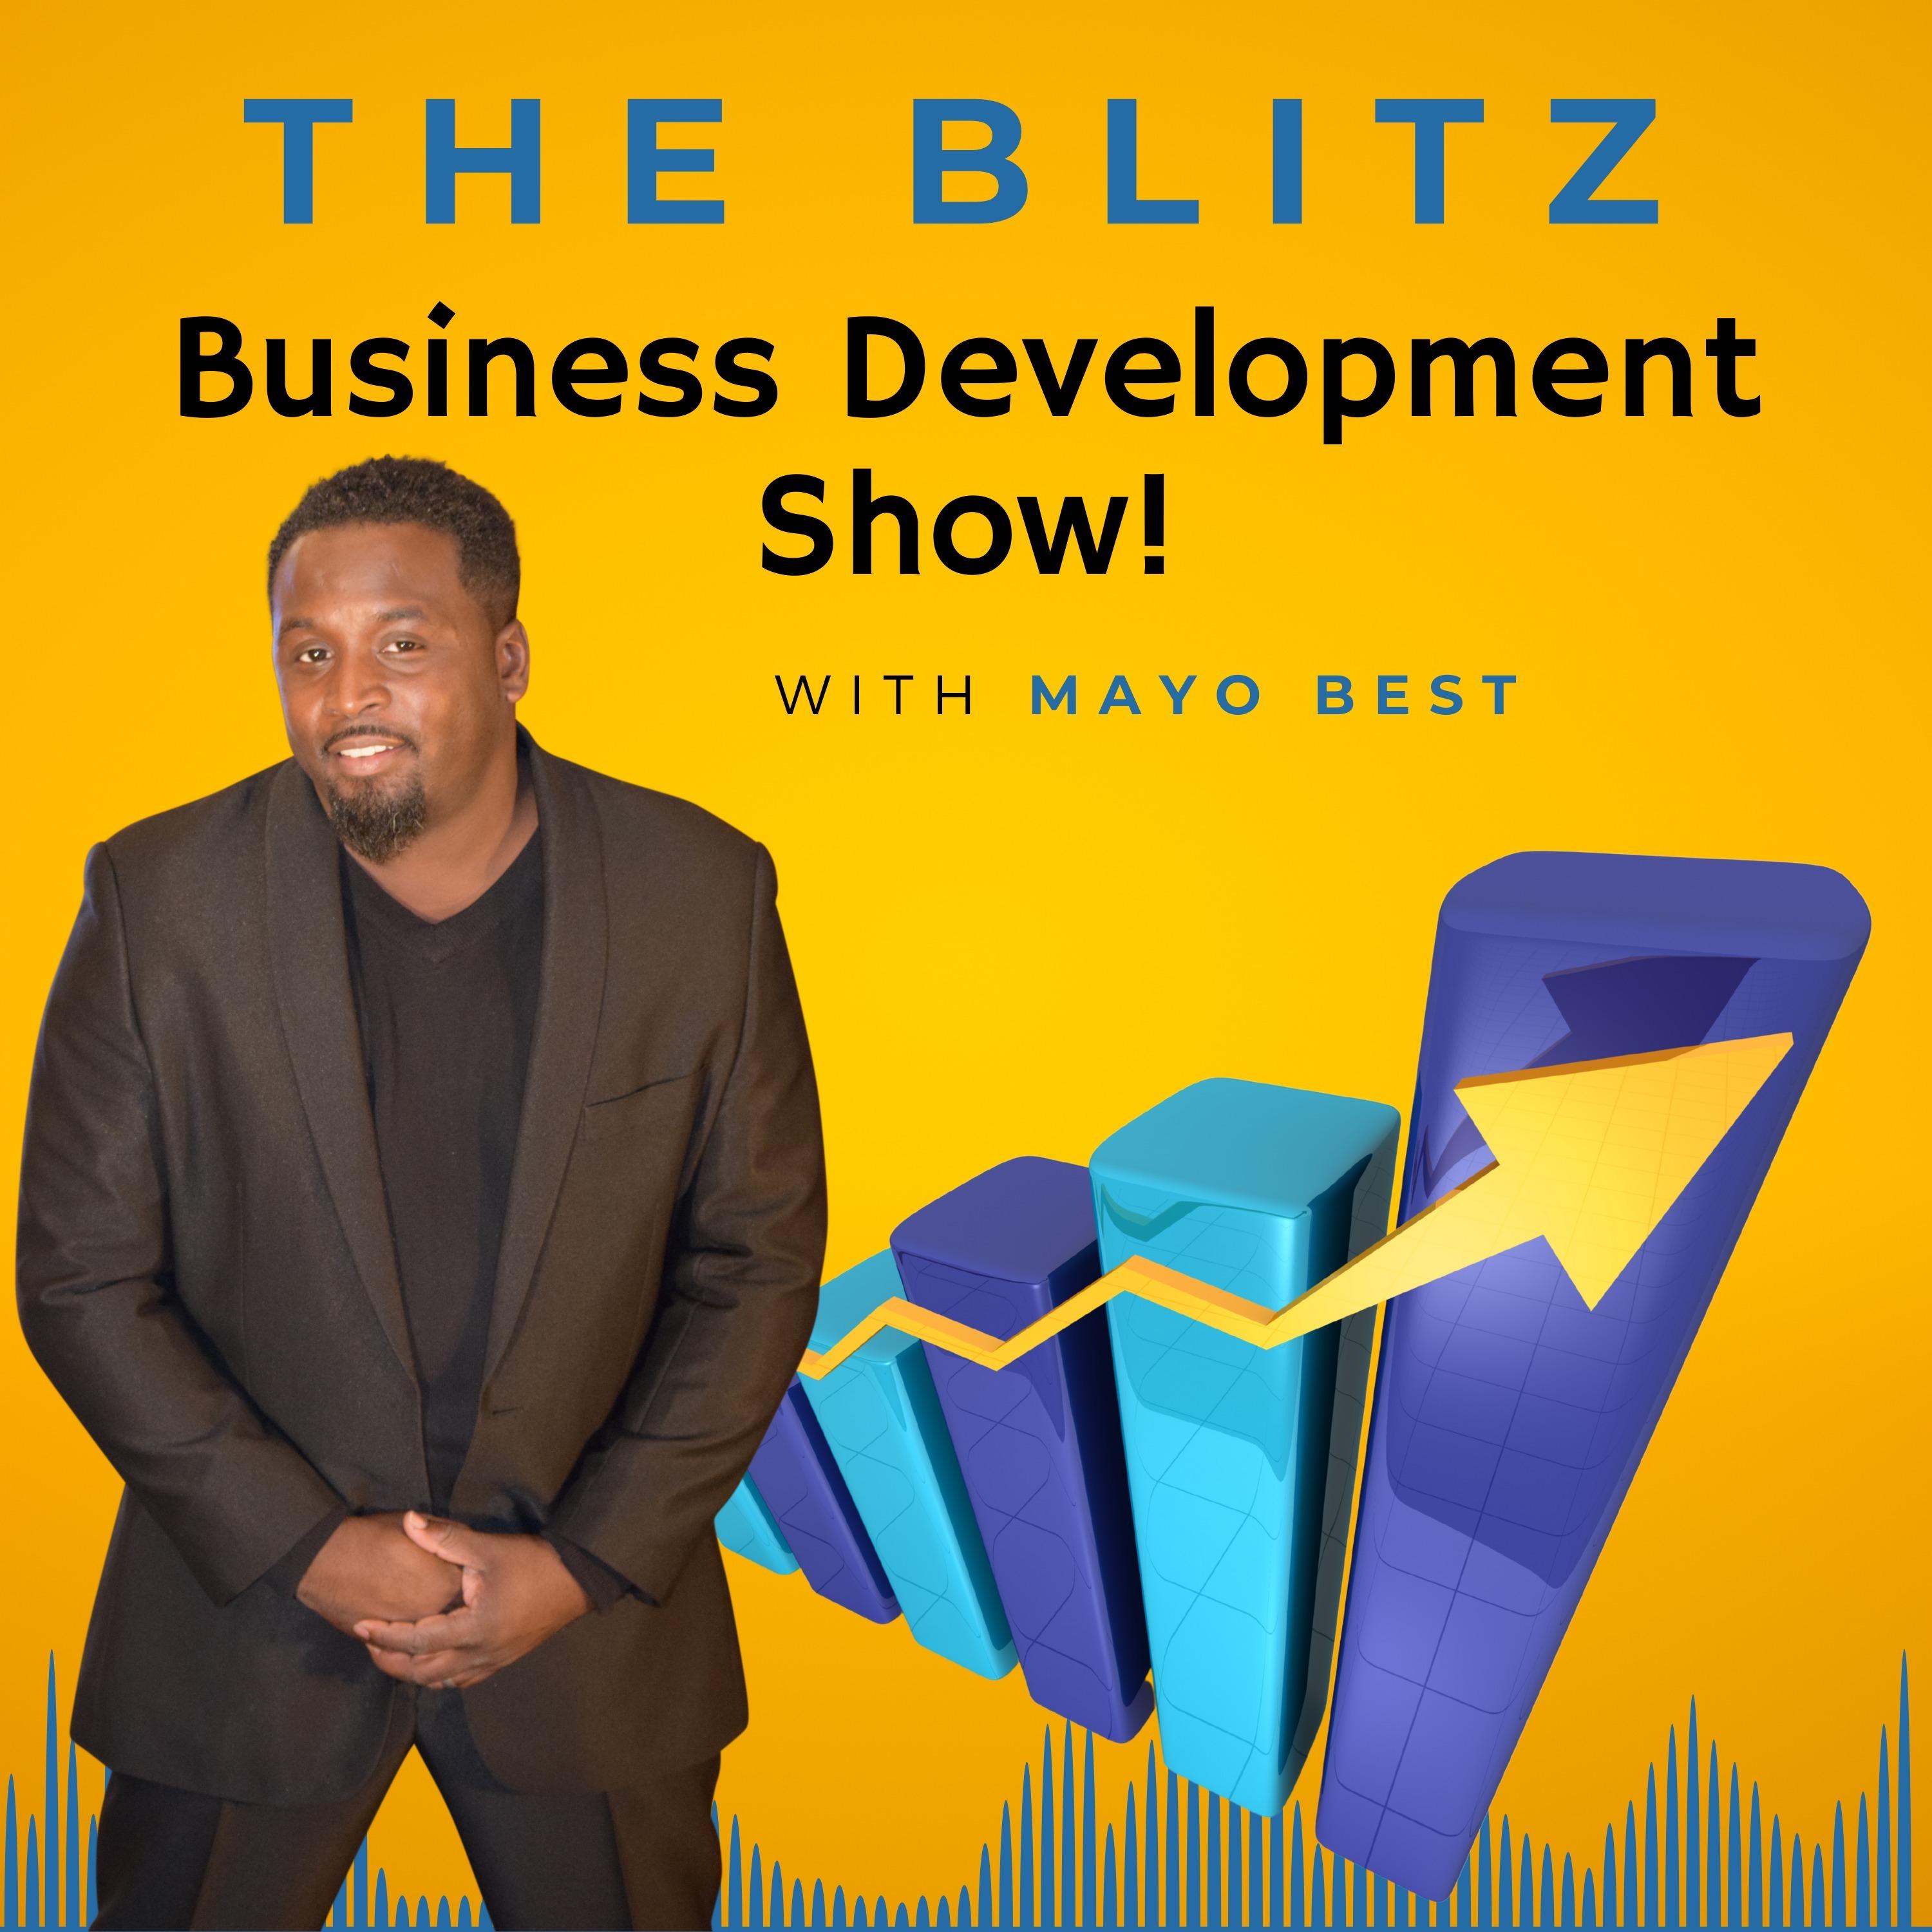 The Blitz Business Development Show